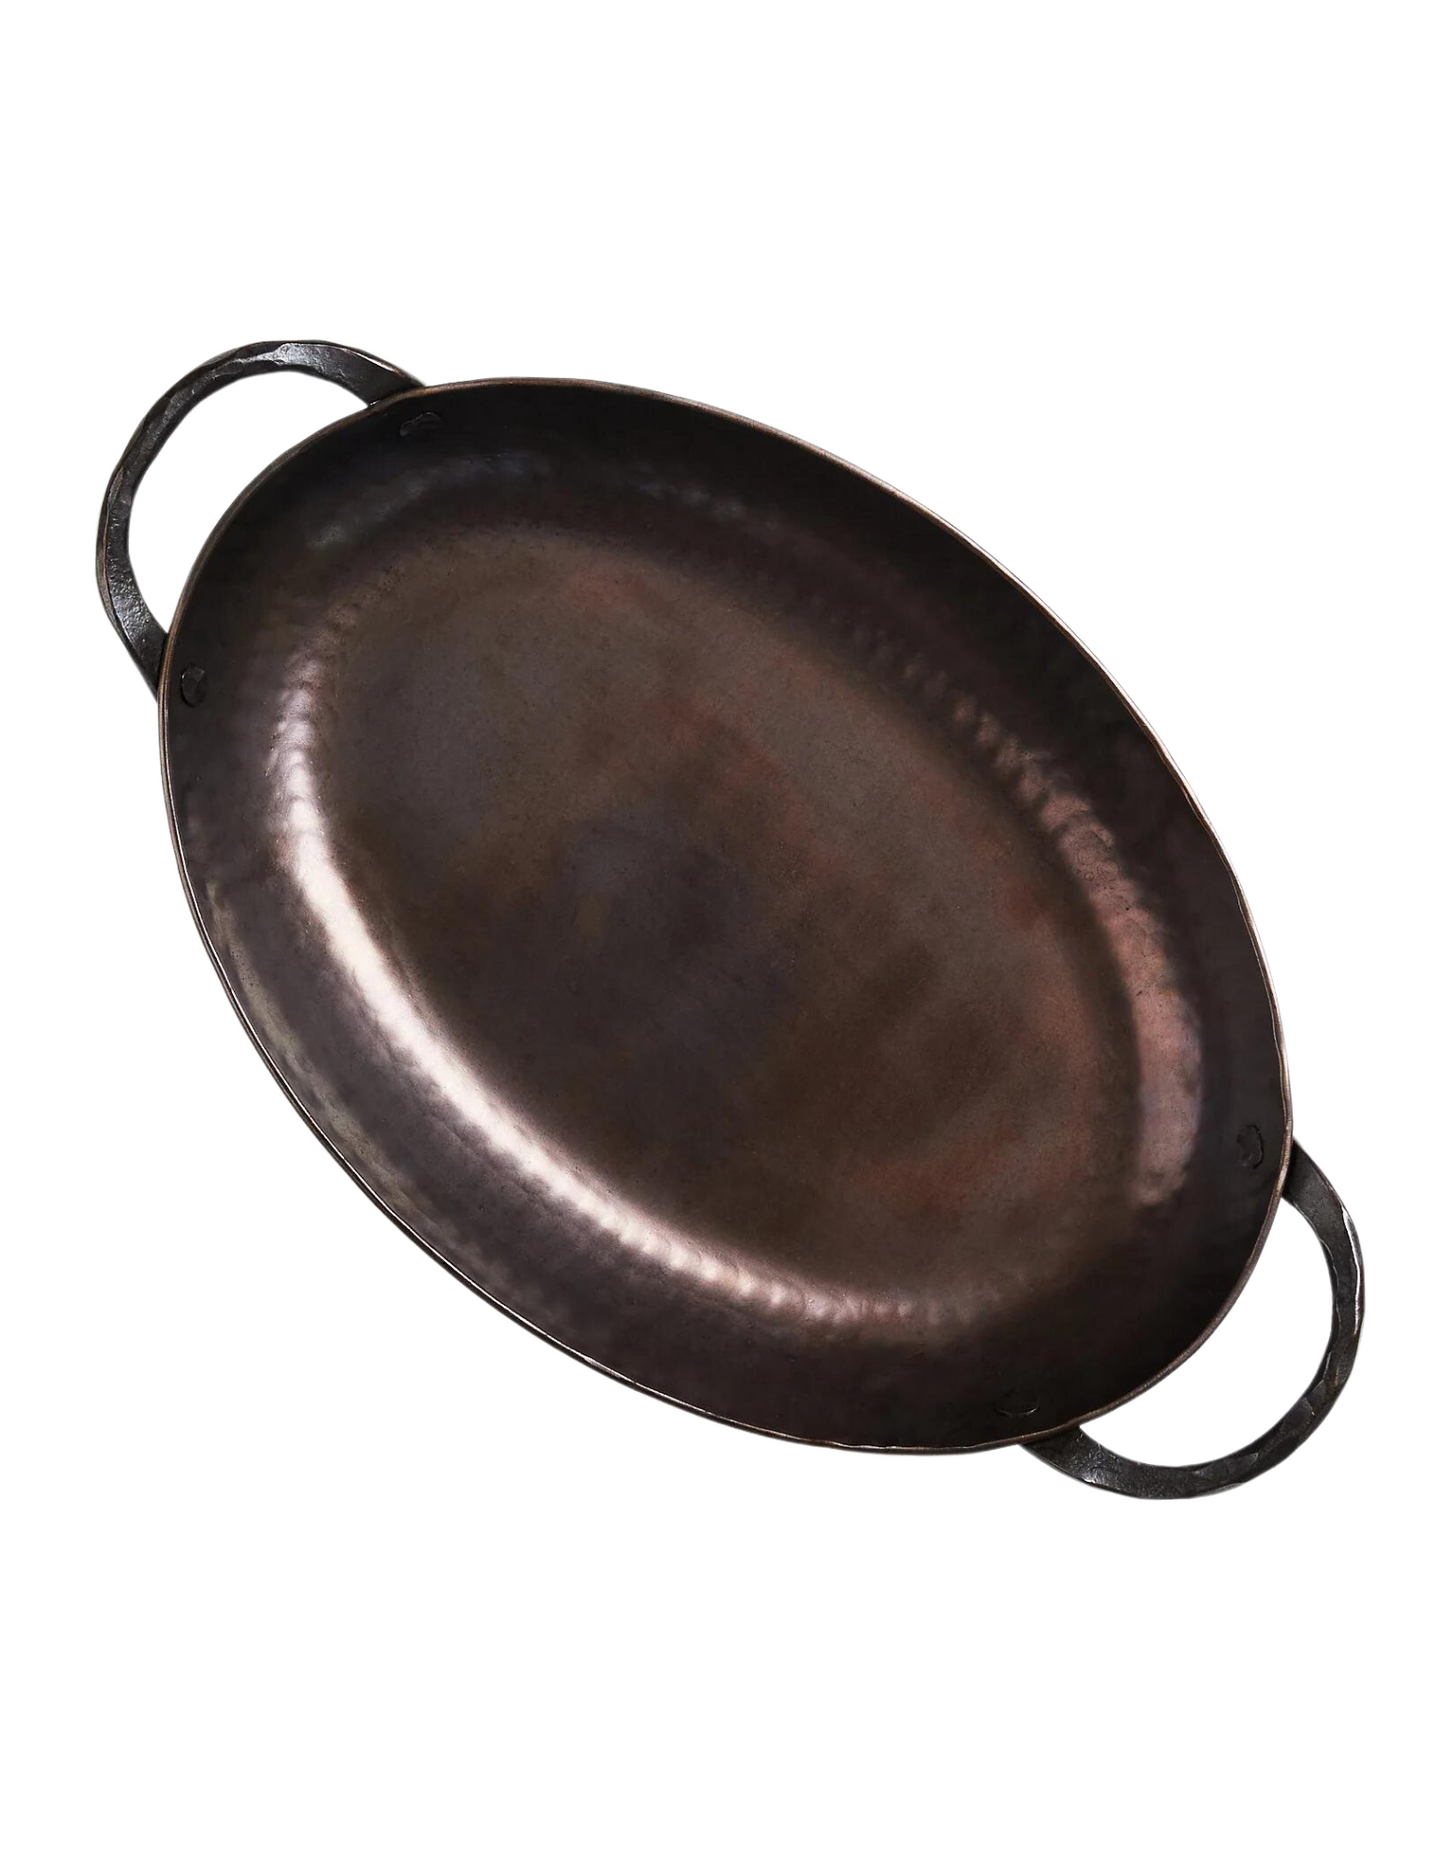 Carbon Steel Oval Roaster